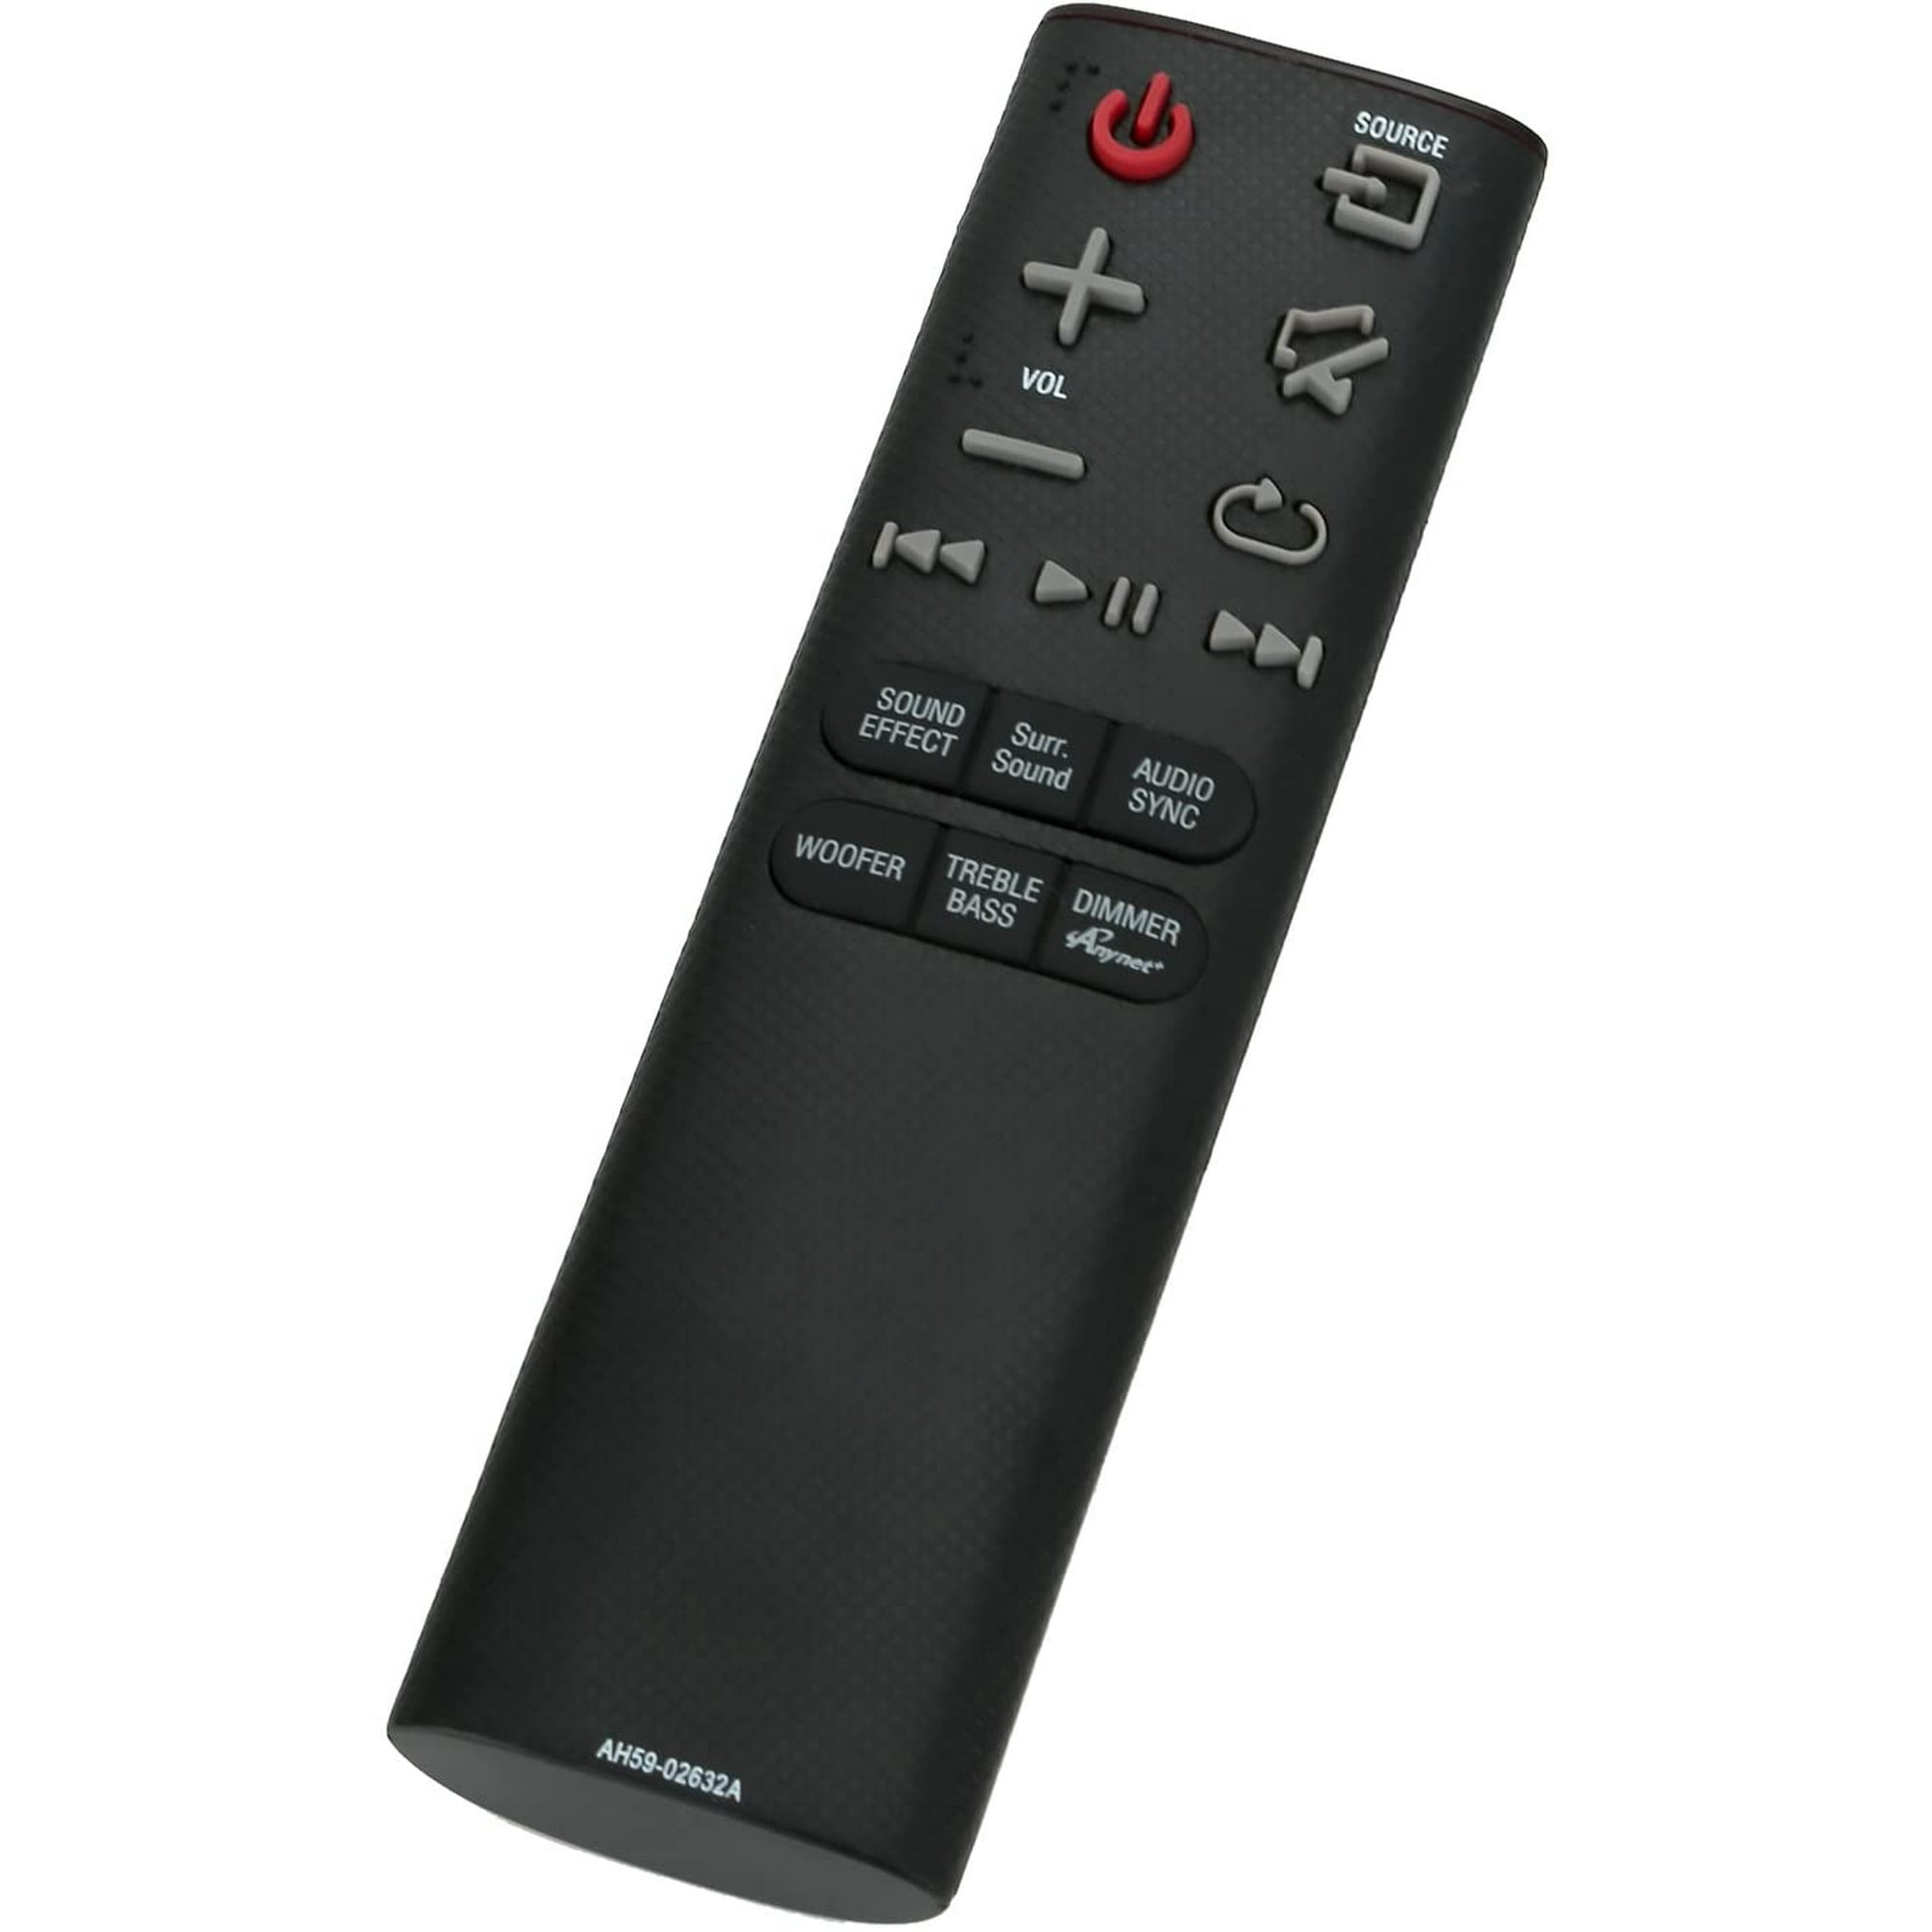 New AH59-02632A Remote Control AH5902632A fit for Samsung Sound Bar HWH750 HWH751 HW-H751 HWH751 ZA HW-H751 ZA HW-H750 HW- H750 ZA | Walmart Canada